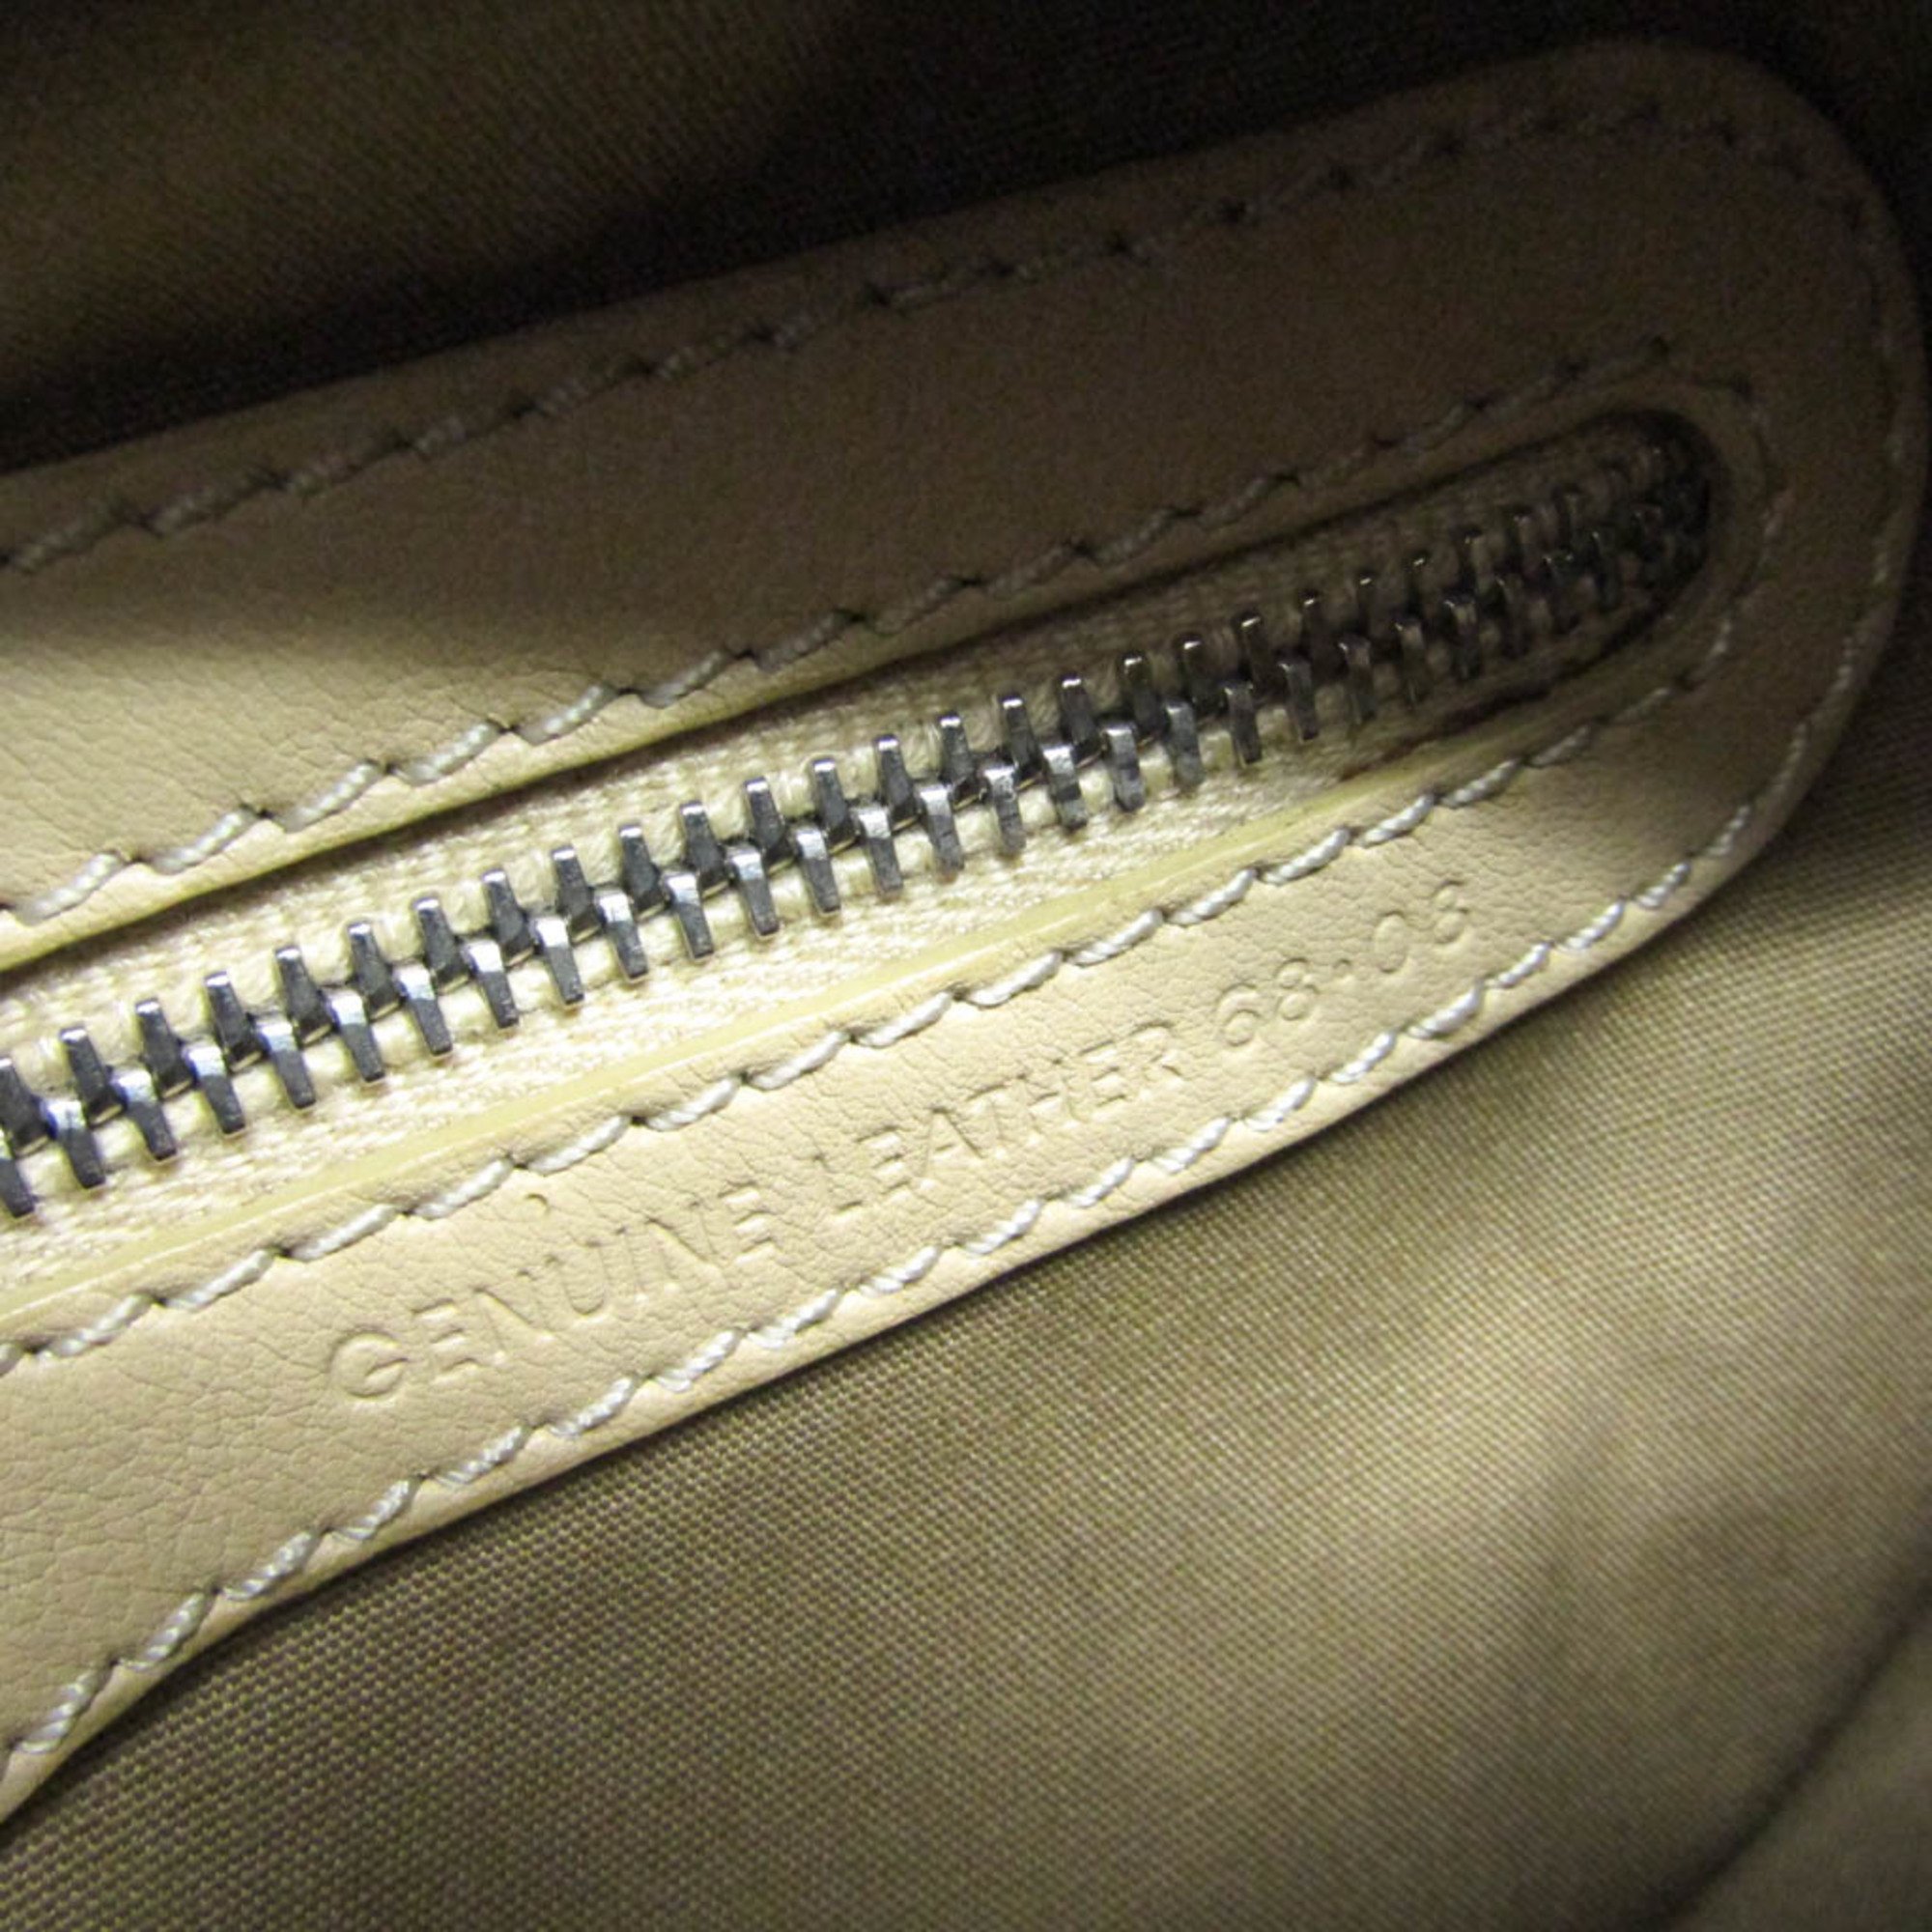 Tod's Women's Leather Handbag Light Beige